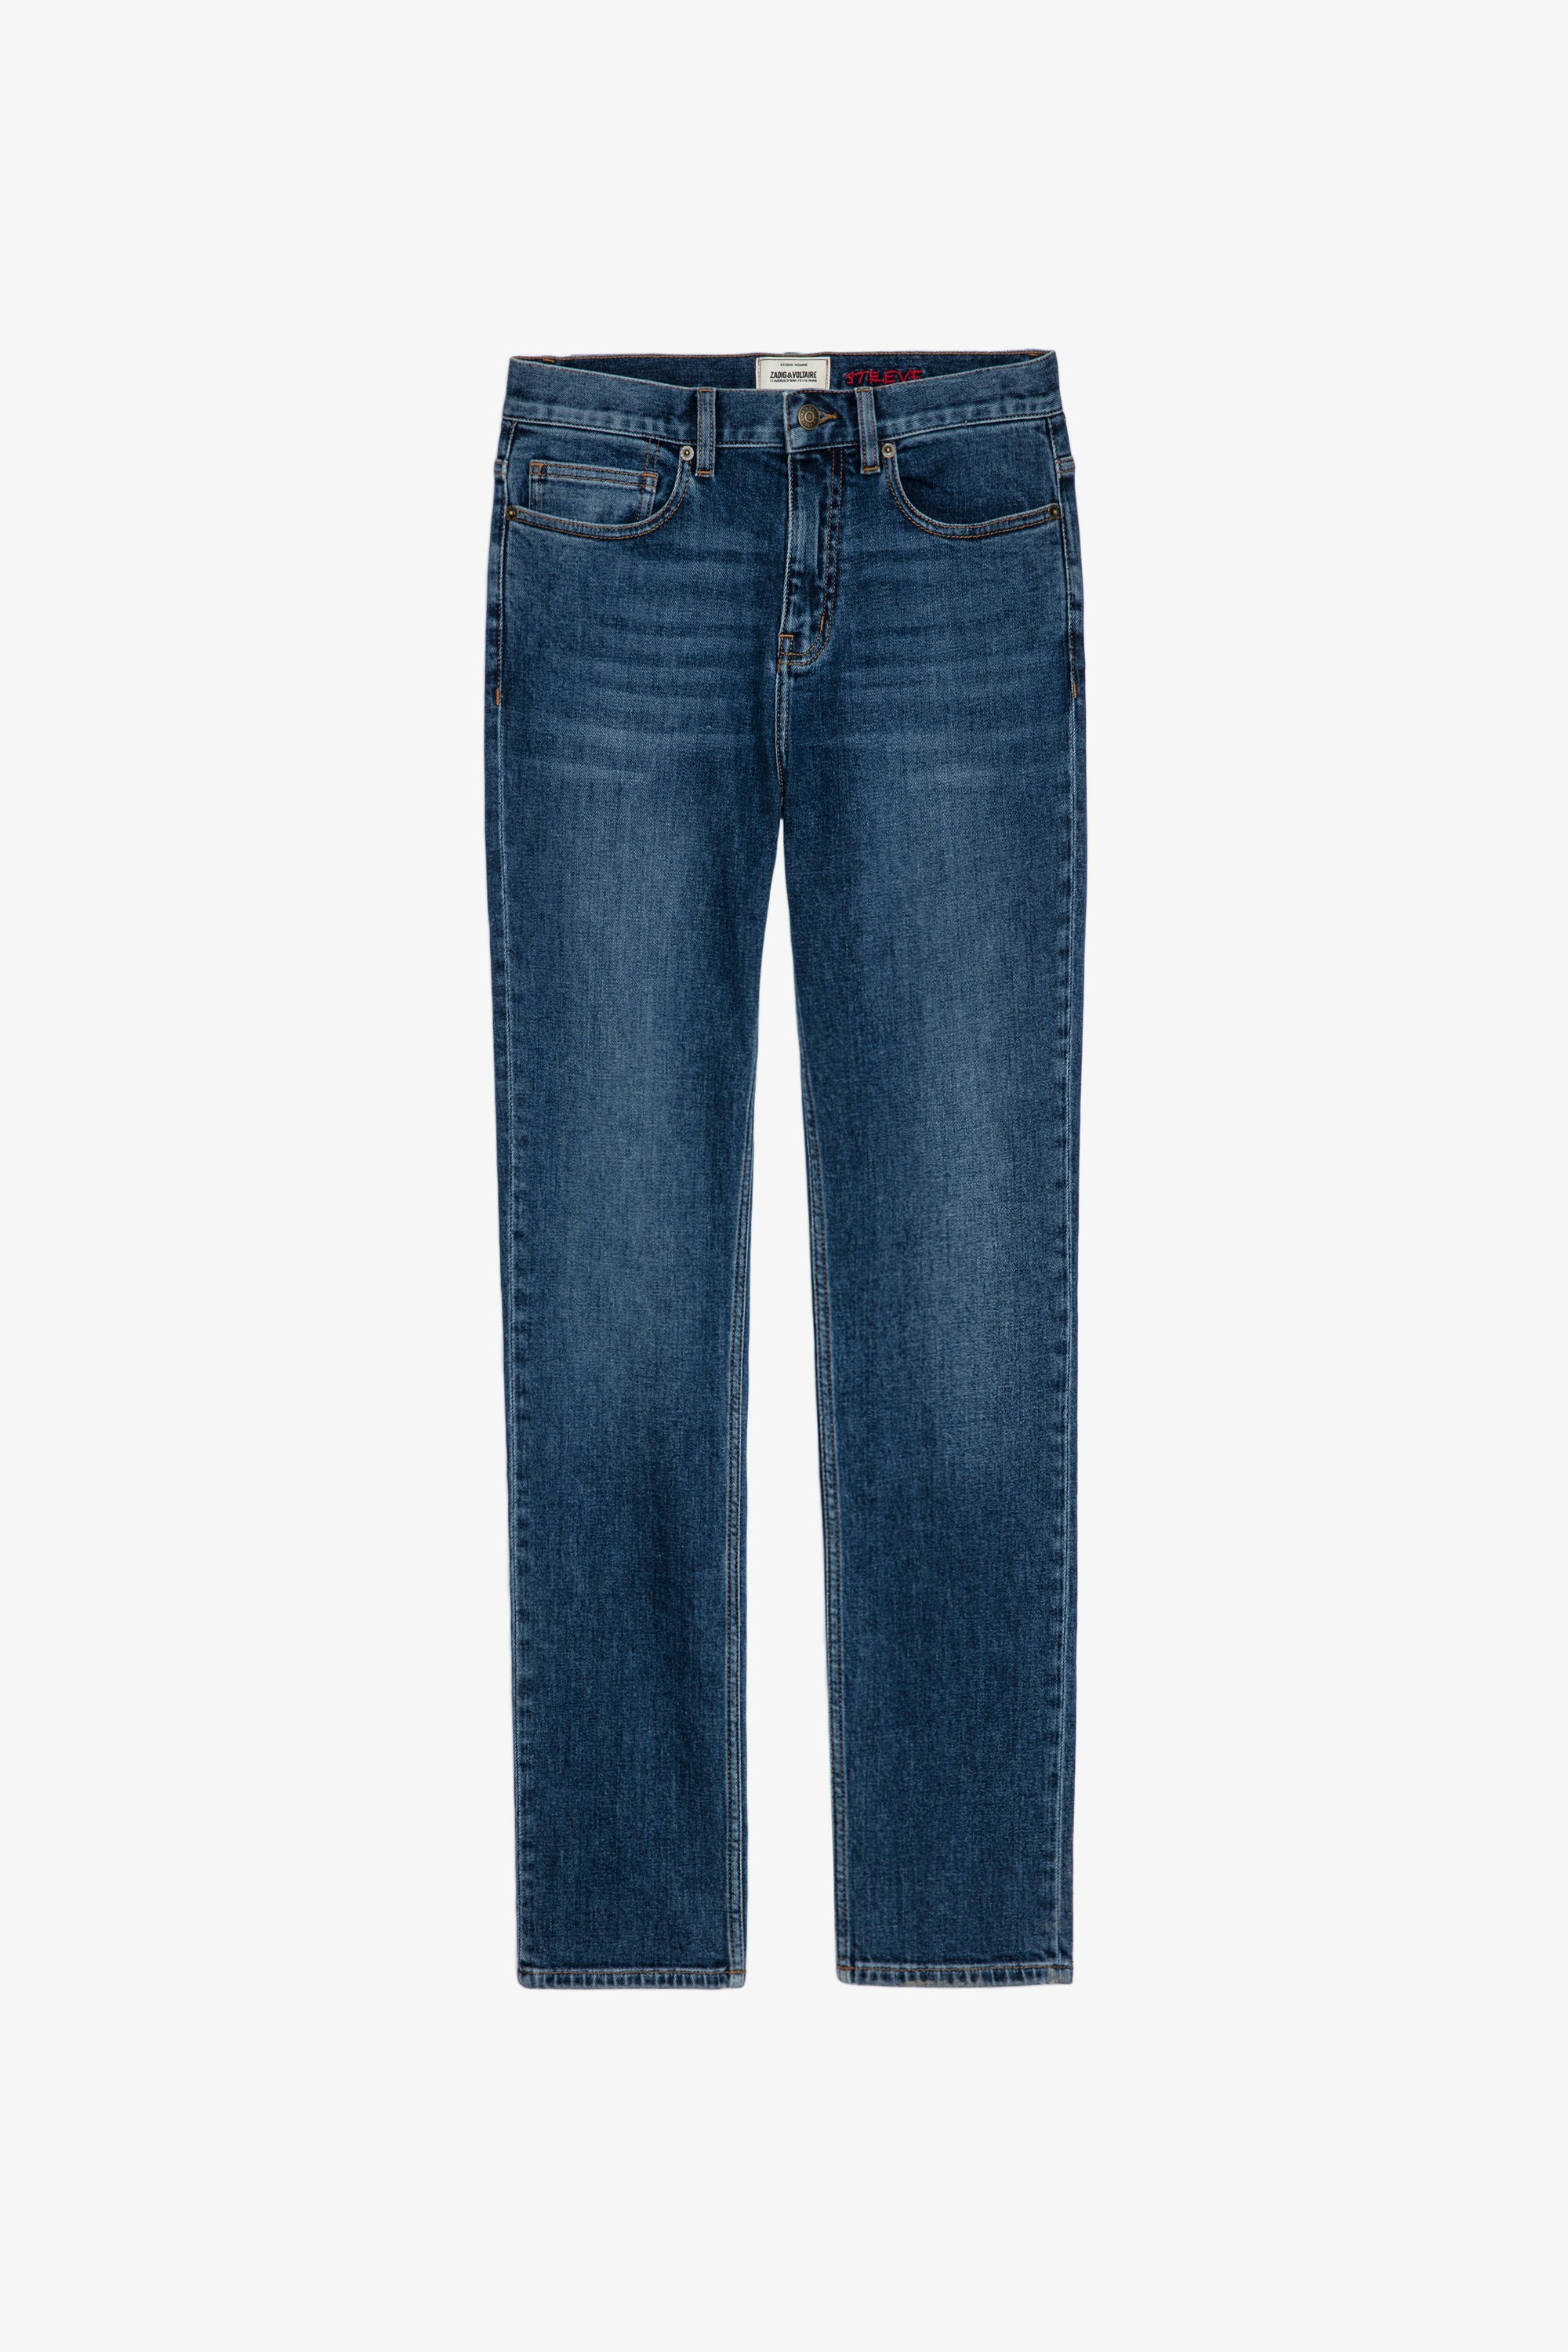 Steeve Jeans - Men’s regular-fit blue denim jeans